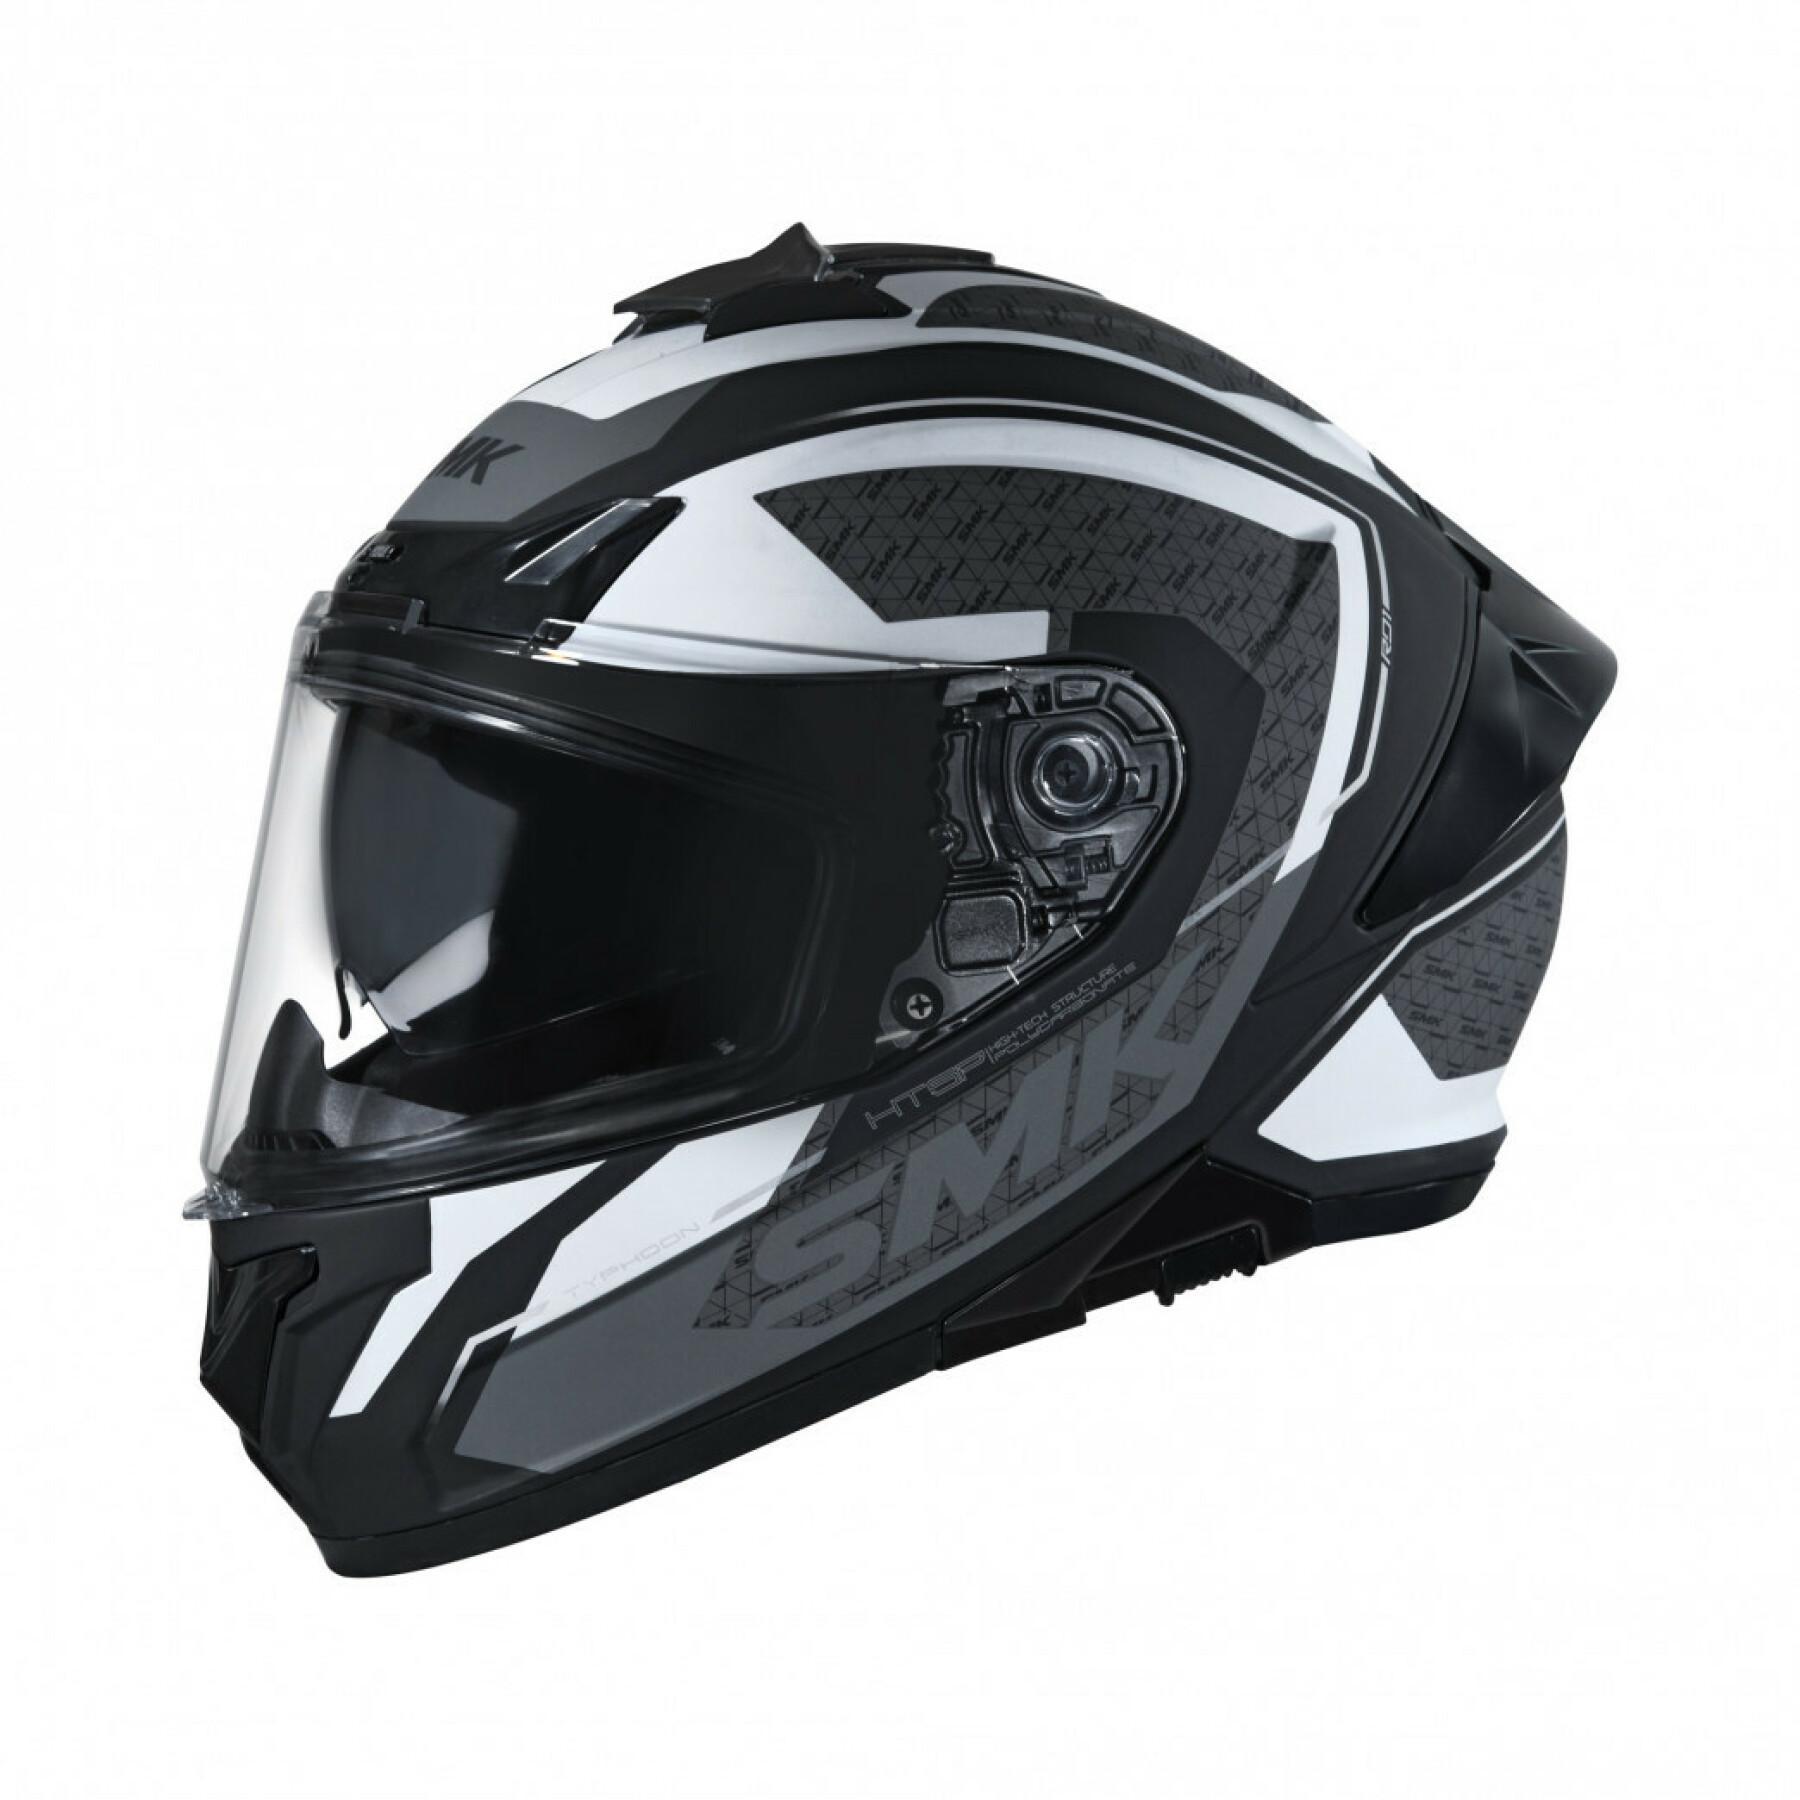 Full face motorcycle helmet SMK Typhoon Rd1